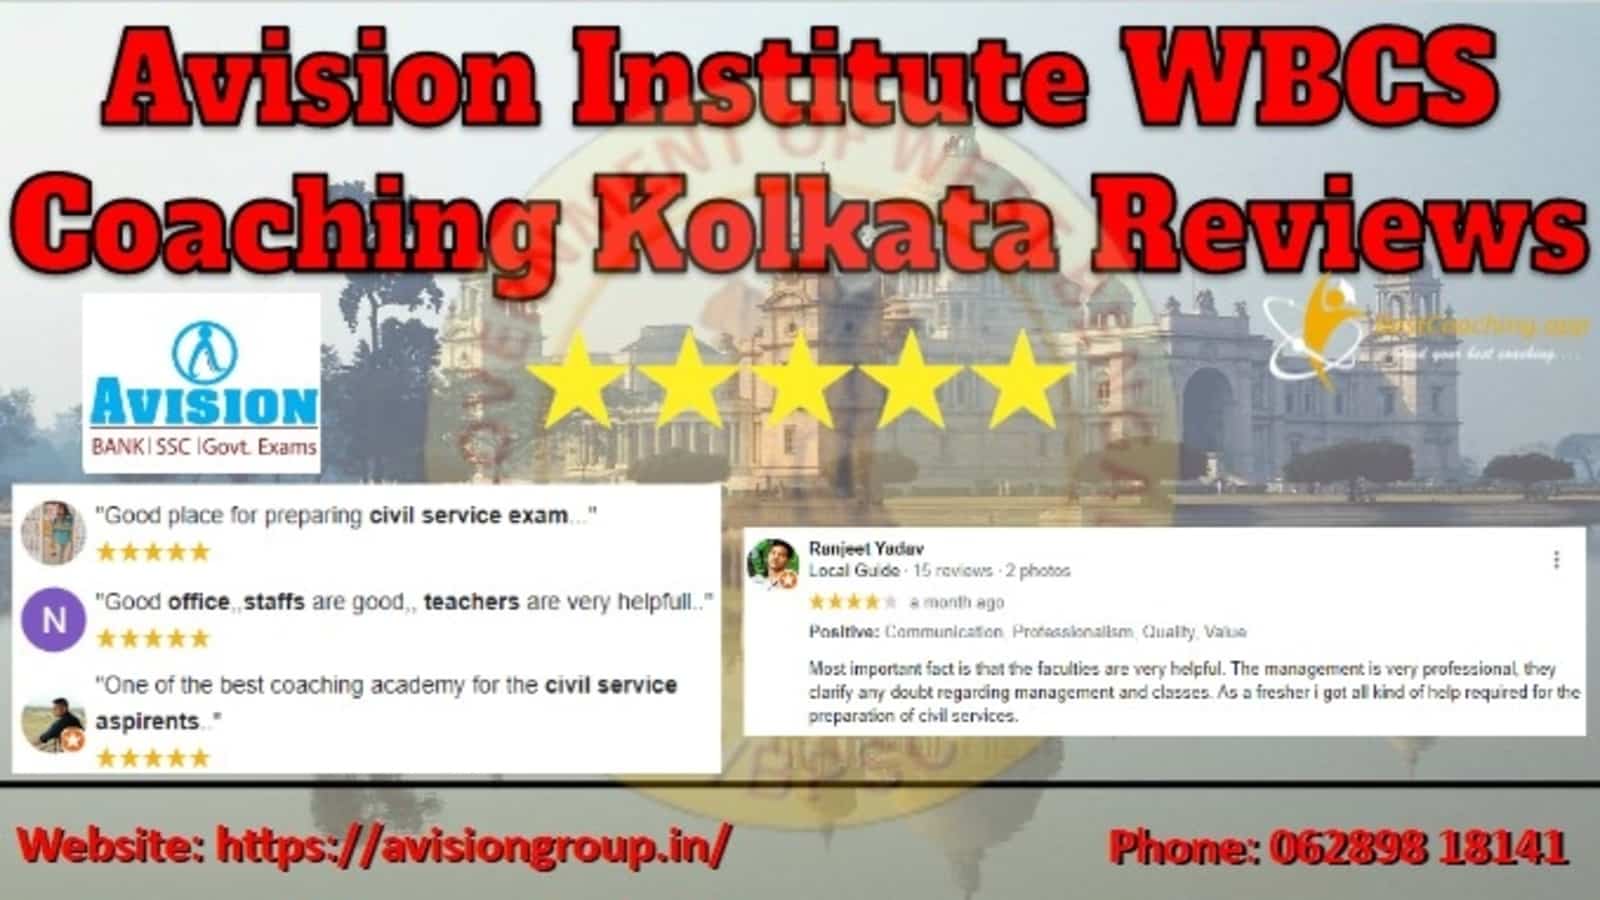 Avision Institute WBCS Coaching Kolkata Review